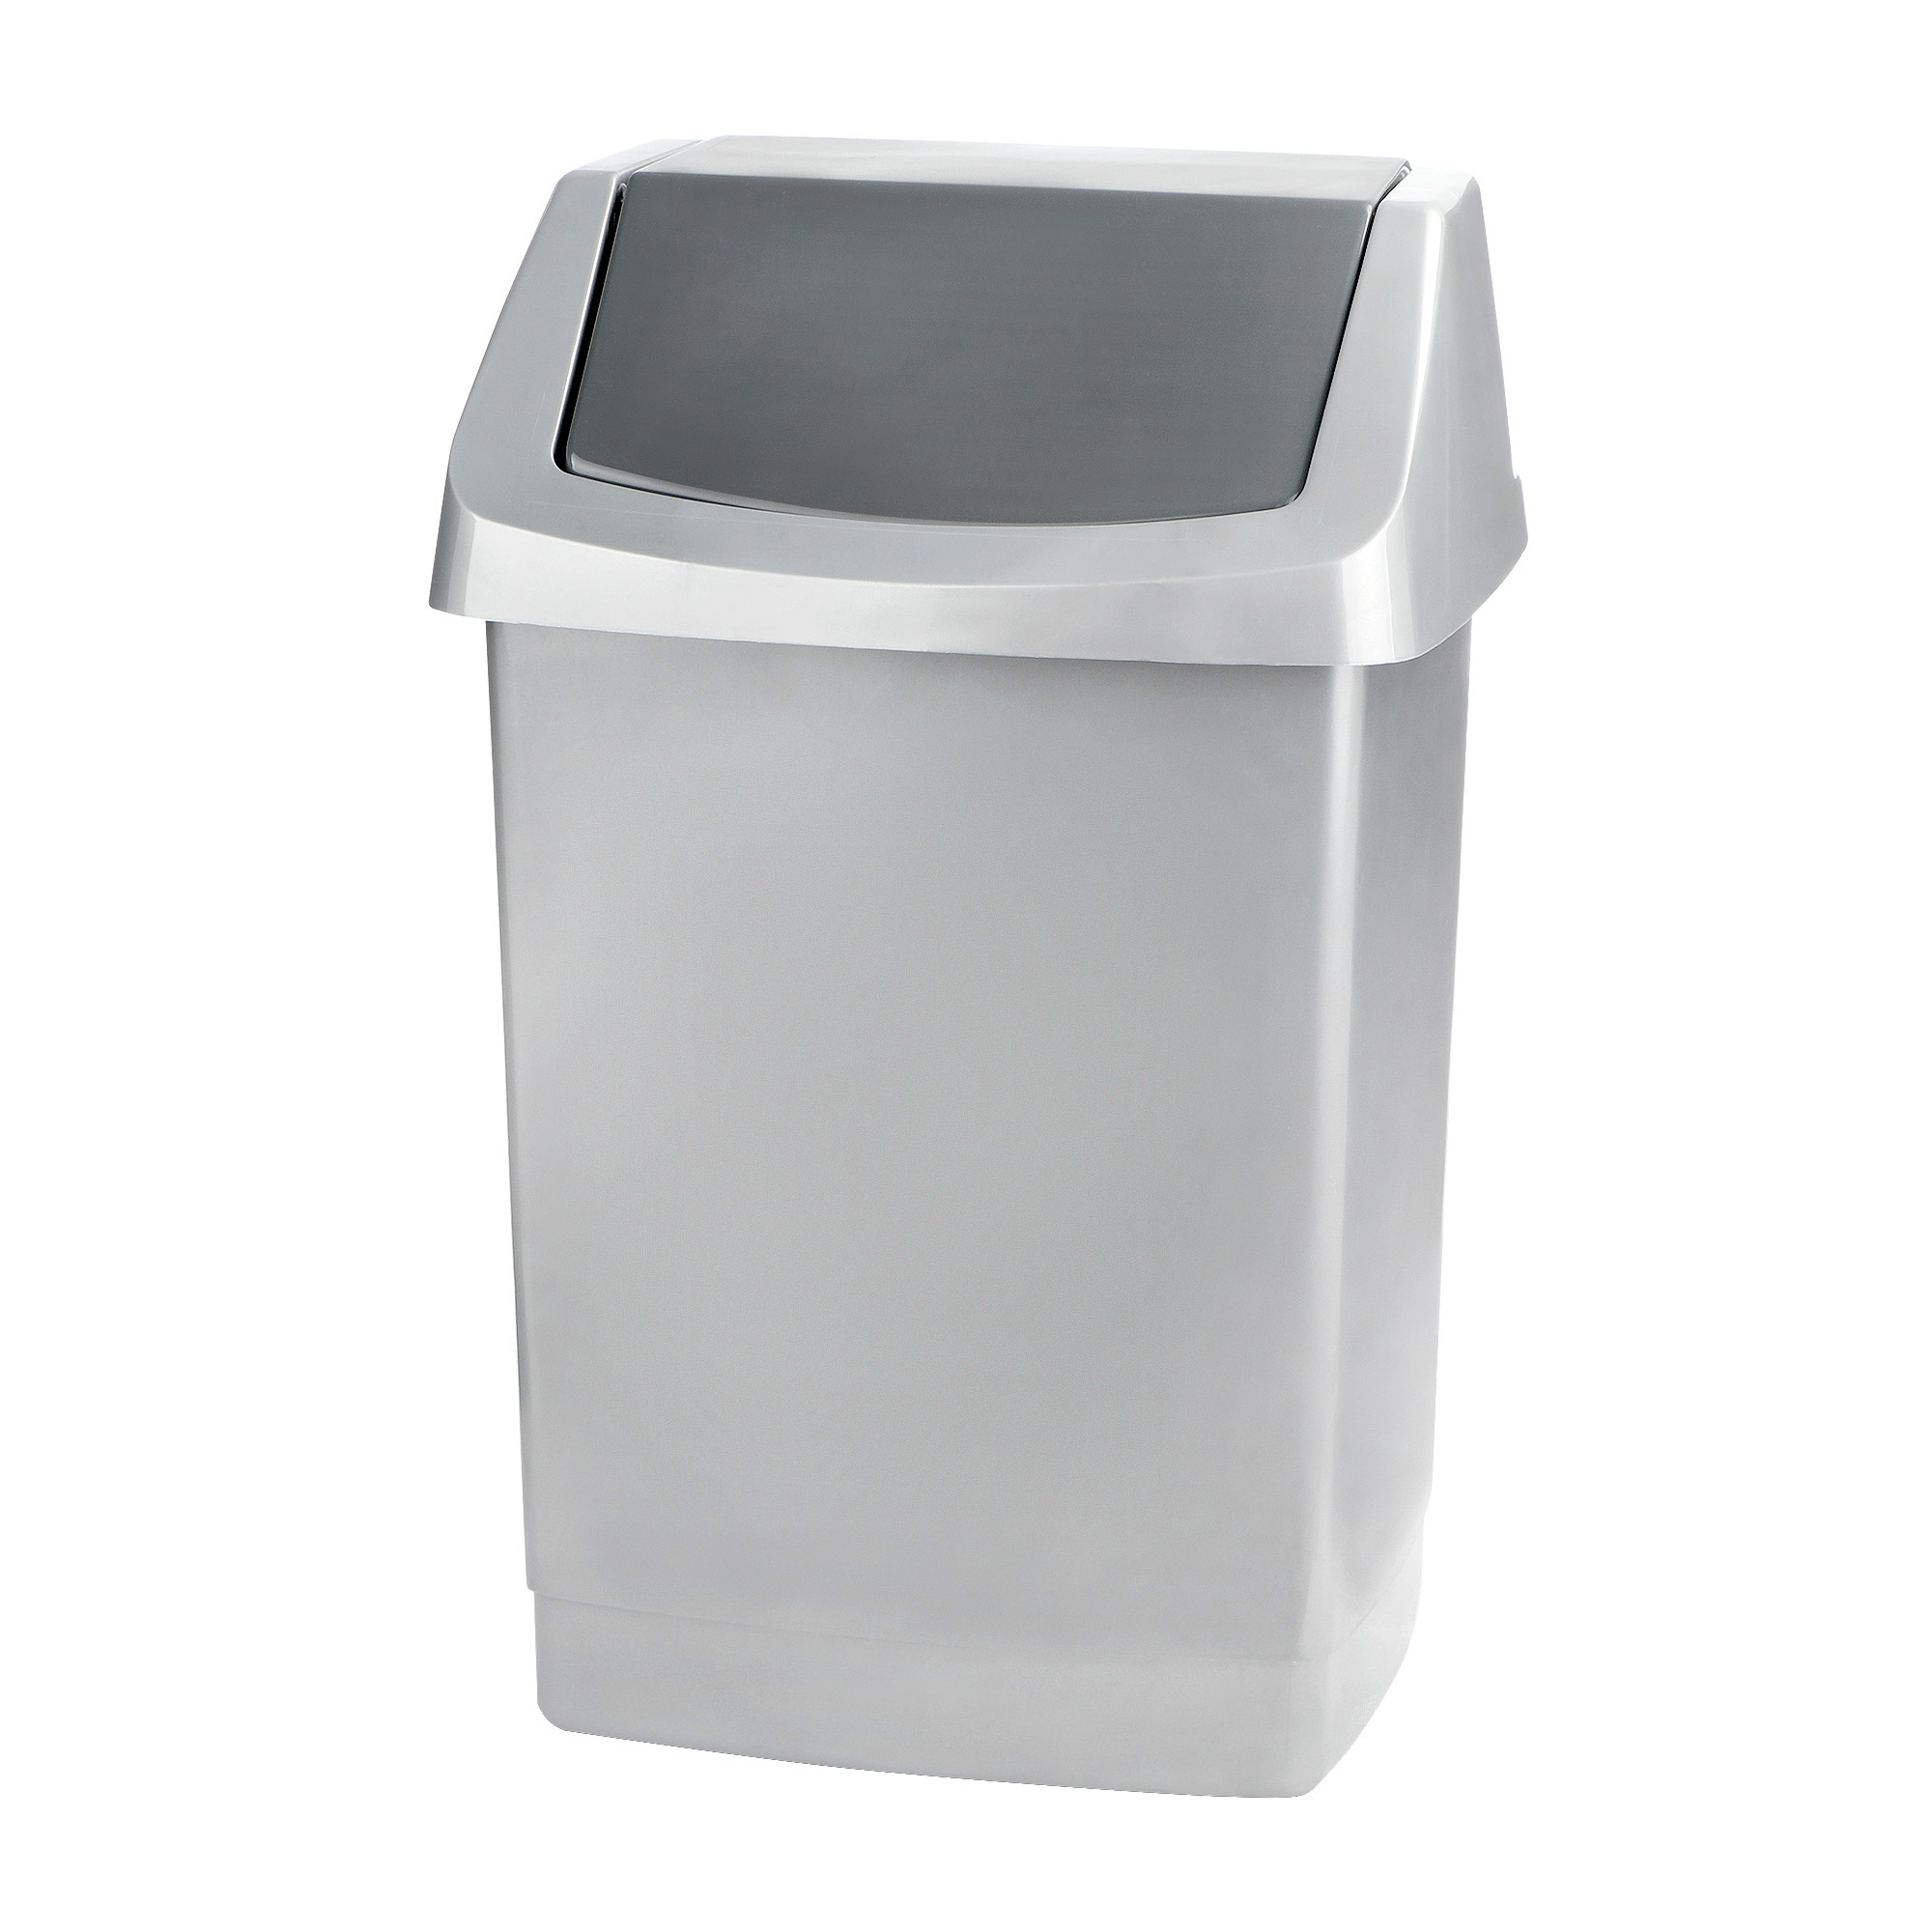 Контейнер для мусора Curver Click-it 25 л серый контейнер для мусора ready to collect темно серый светло серый 20л curver 02102 229 00